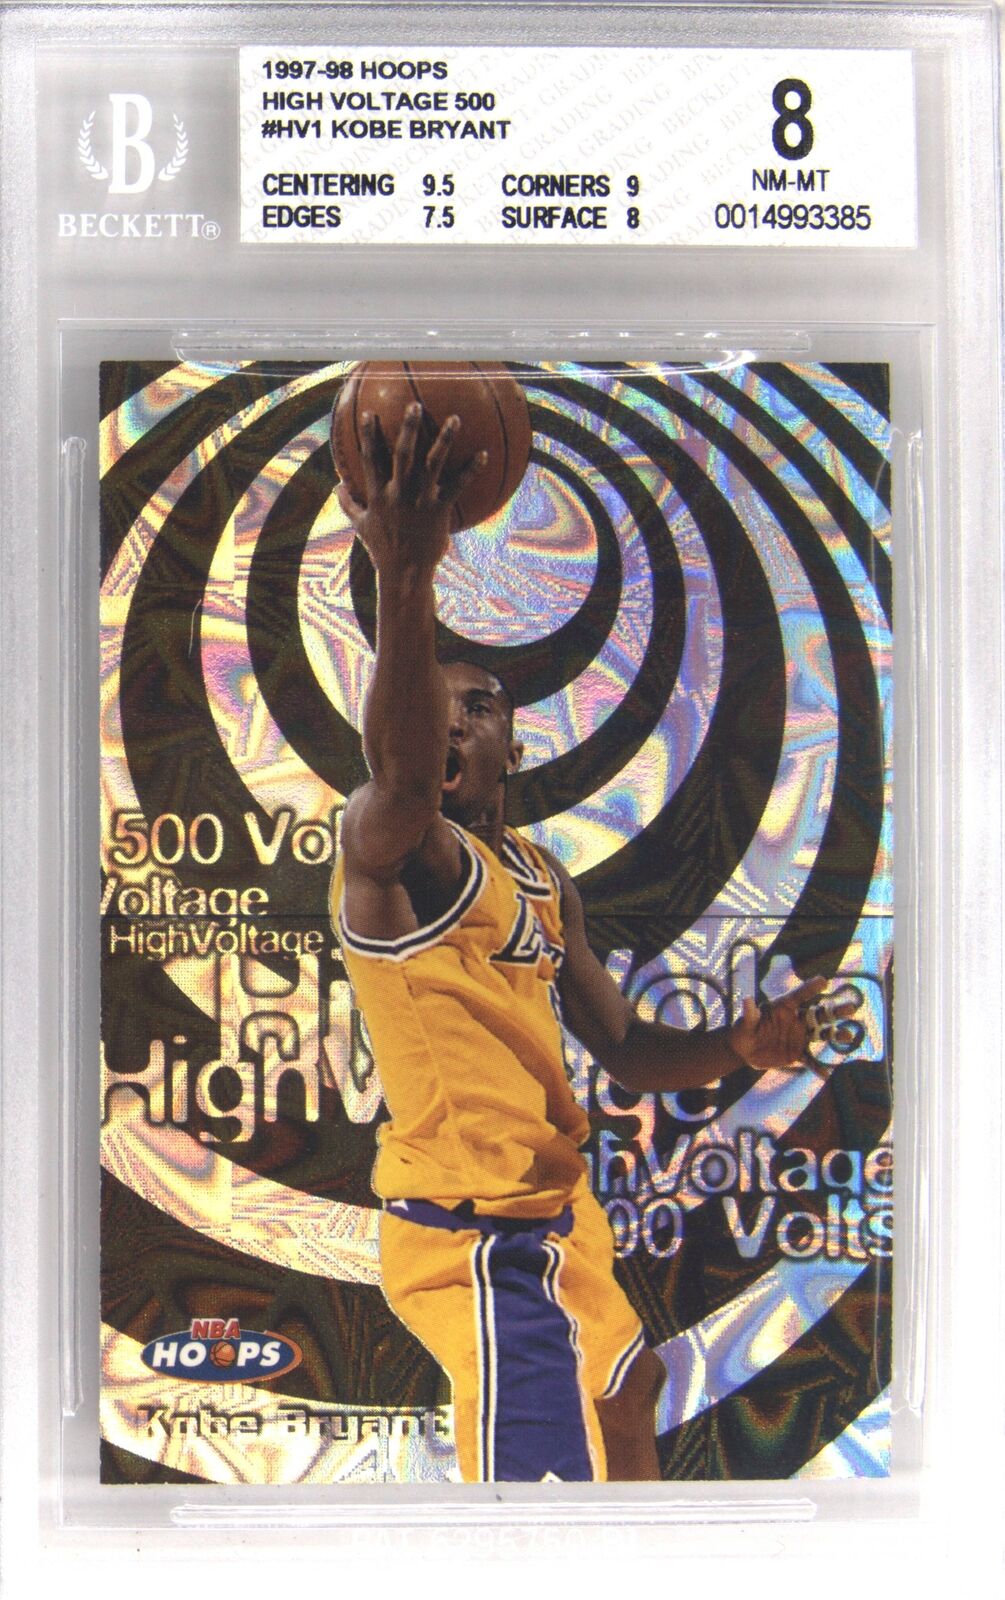 1997-98 Hoops High Voltage Kobe Bryant 388/500 #HV1 Beckett 8